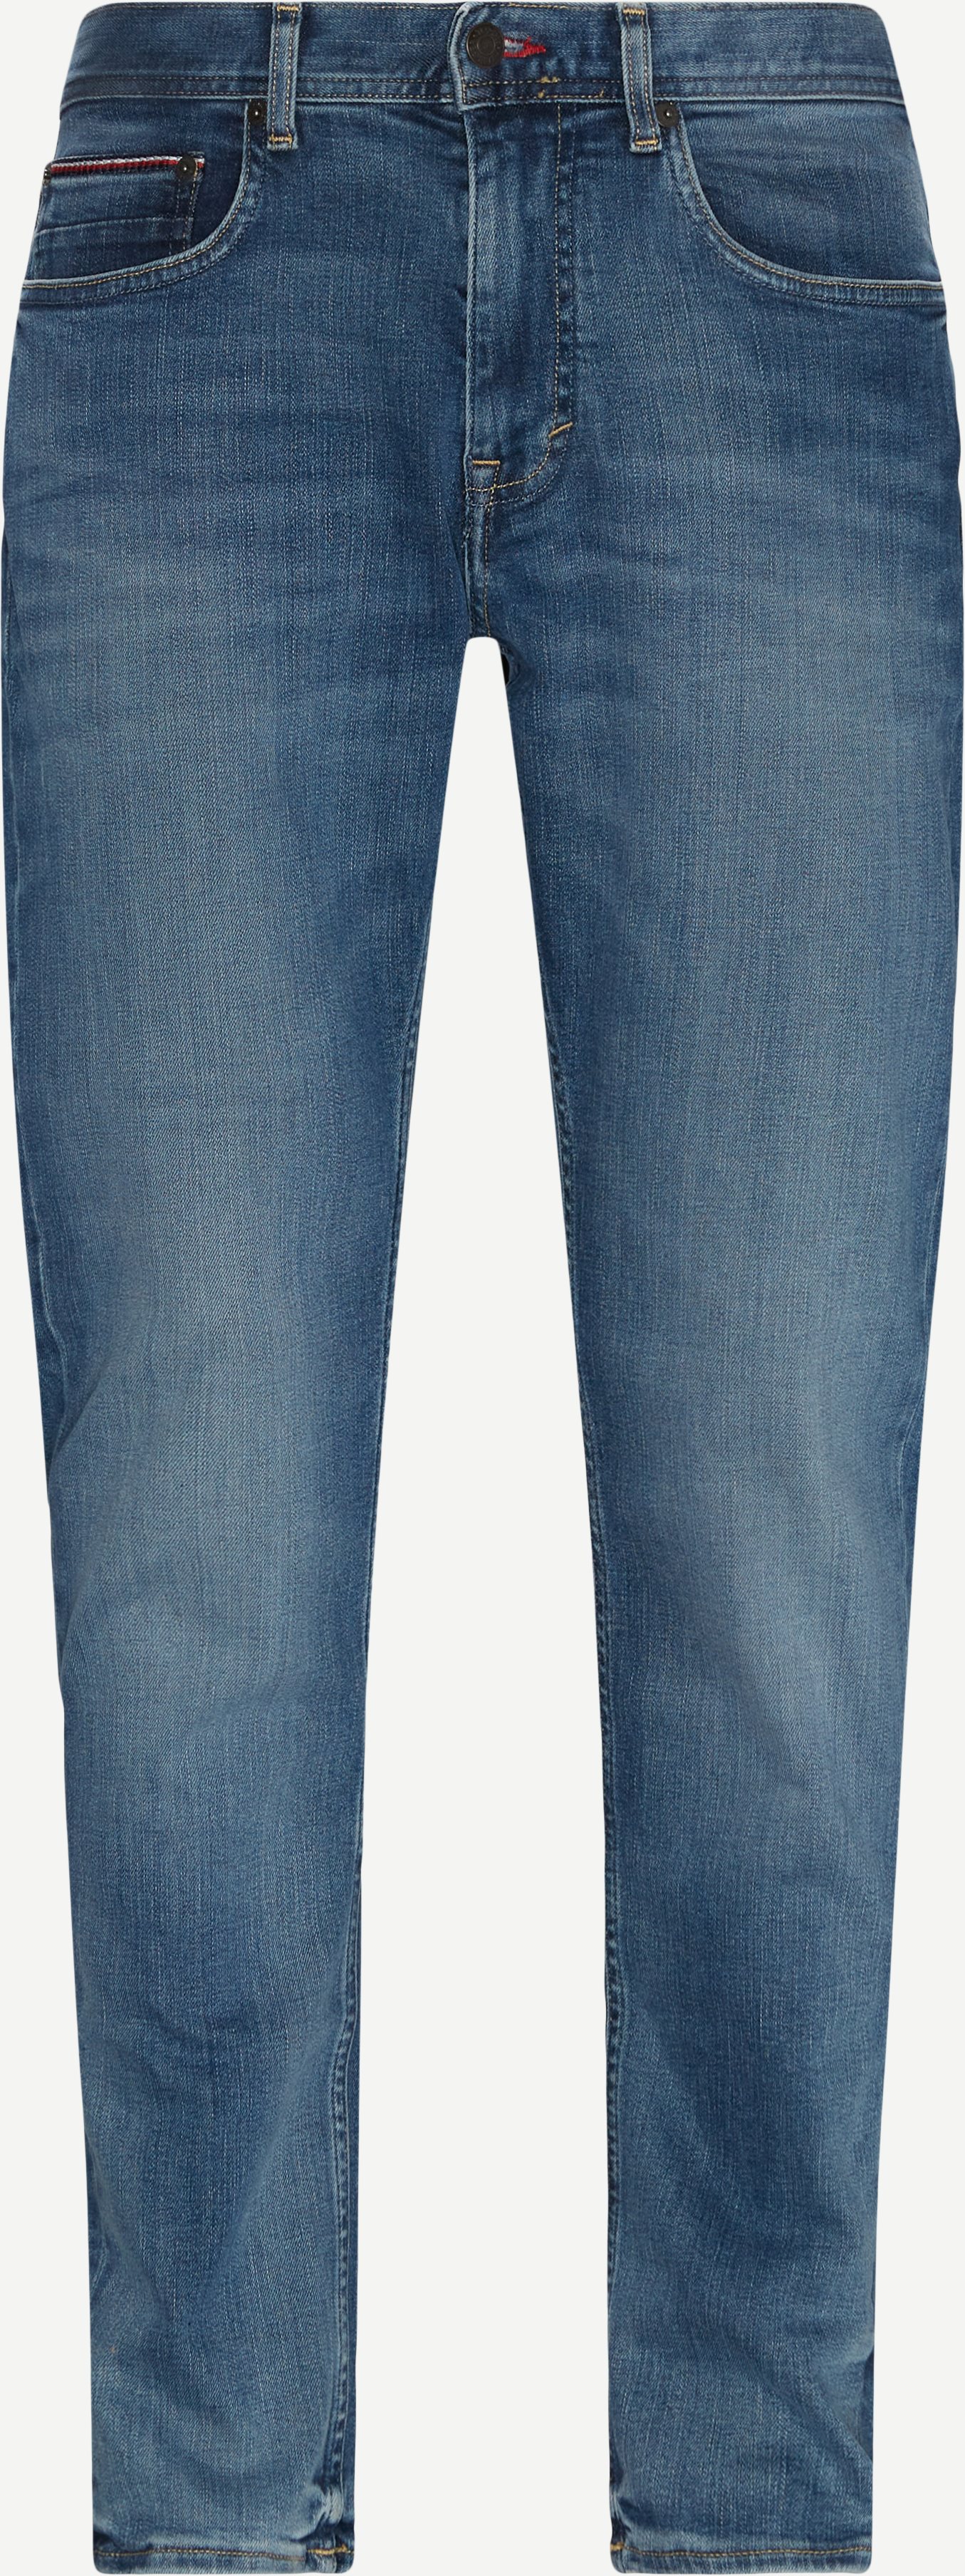 Houston Stretch Jeans - Jeans - Slim fit - Denim